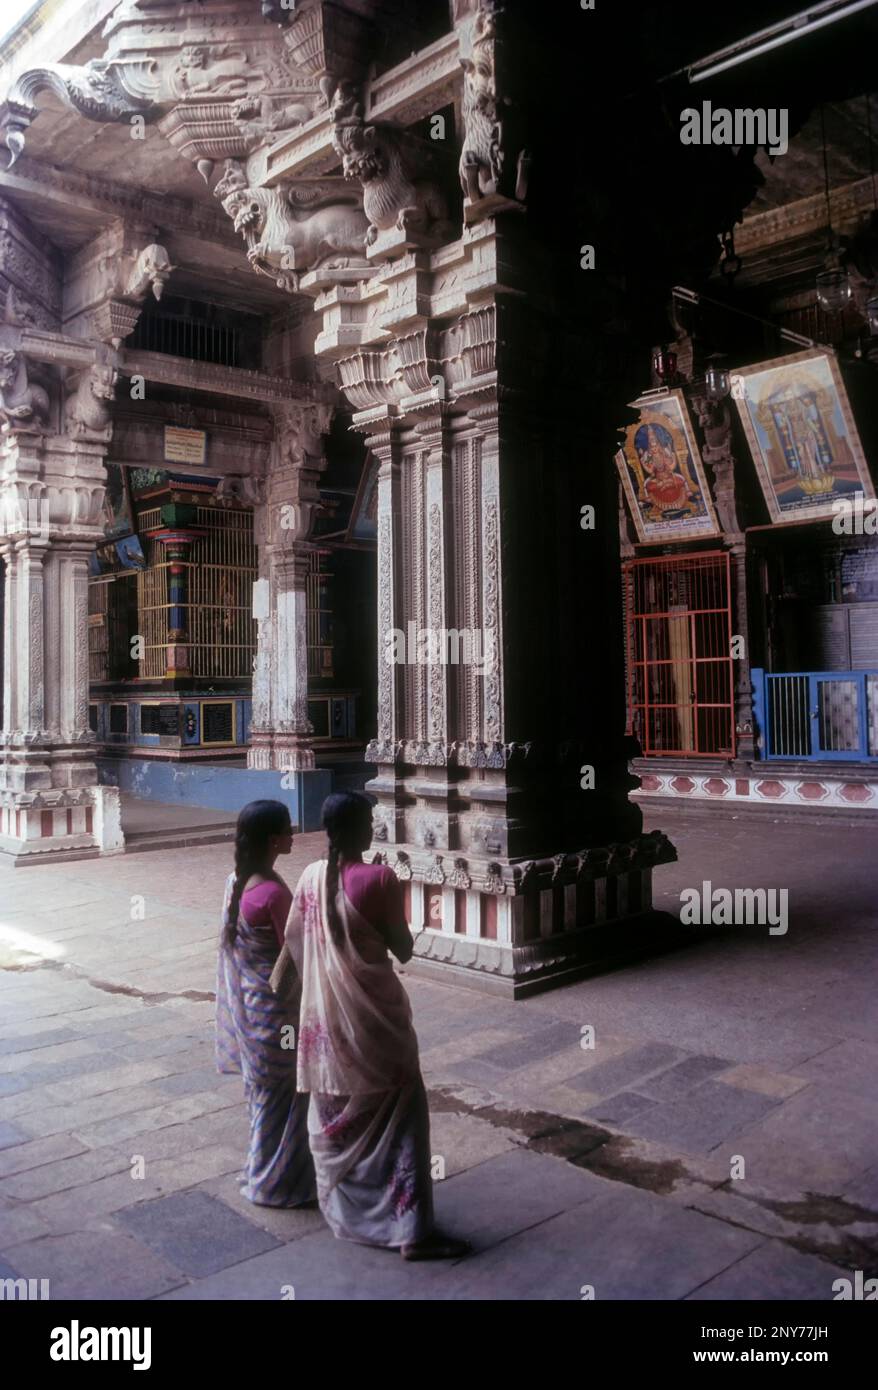 The Giant pillar in front of the nrittasaba in Nataraja Temple at Chidambaram, Tamilnadu, India Stock Photo